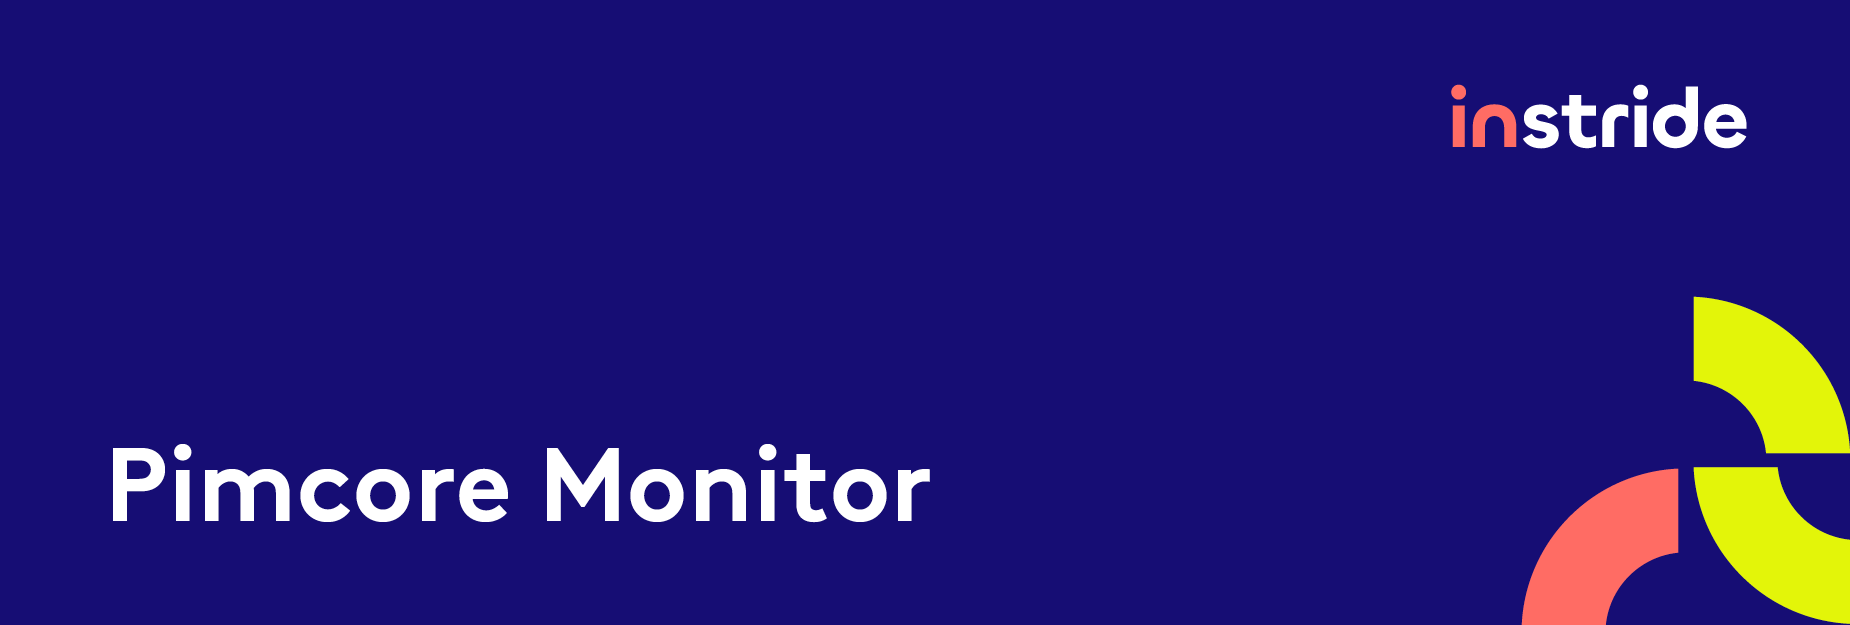 Pimcore Monitor Bundle